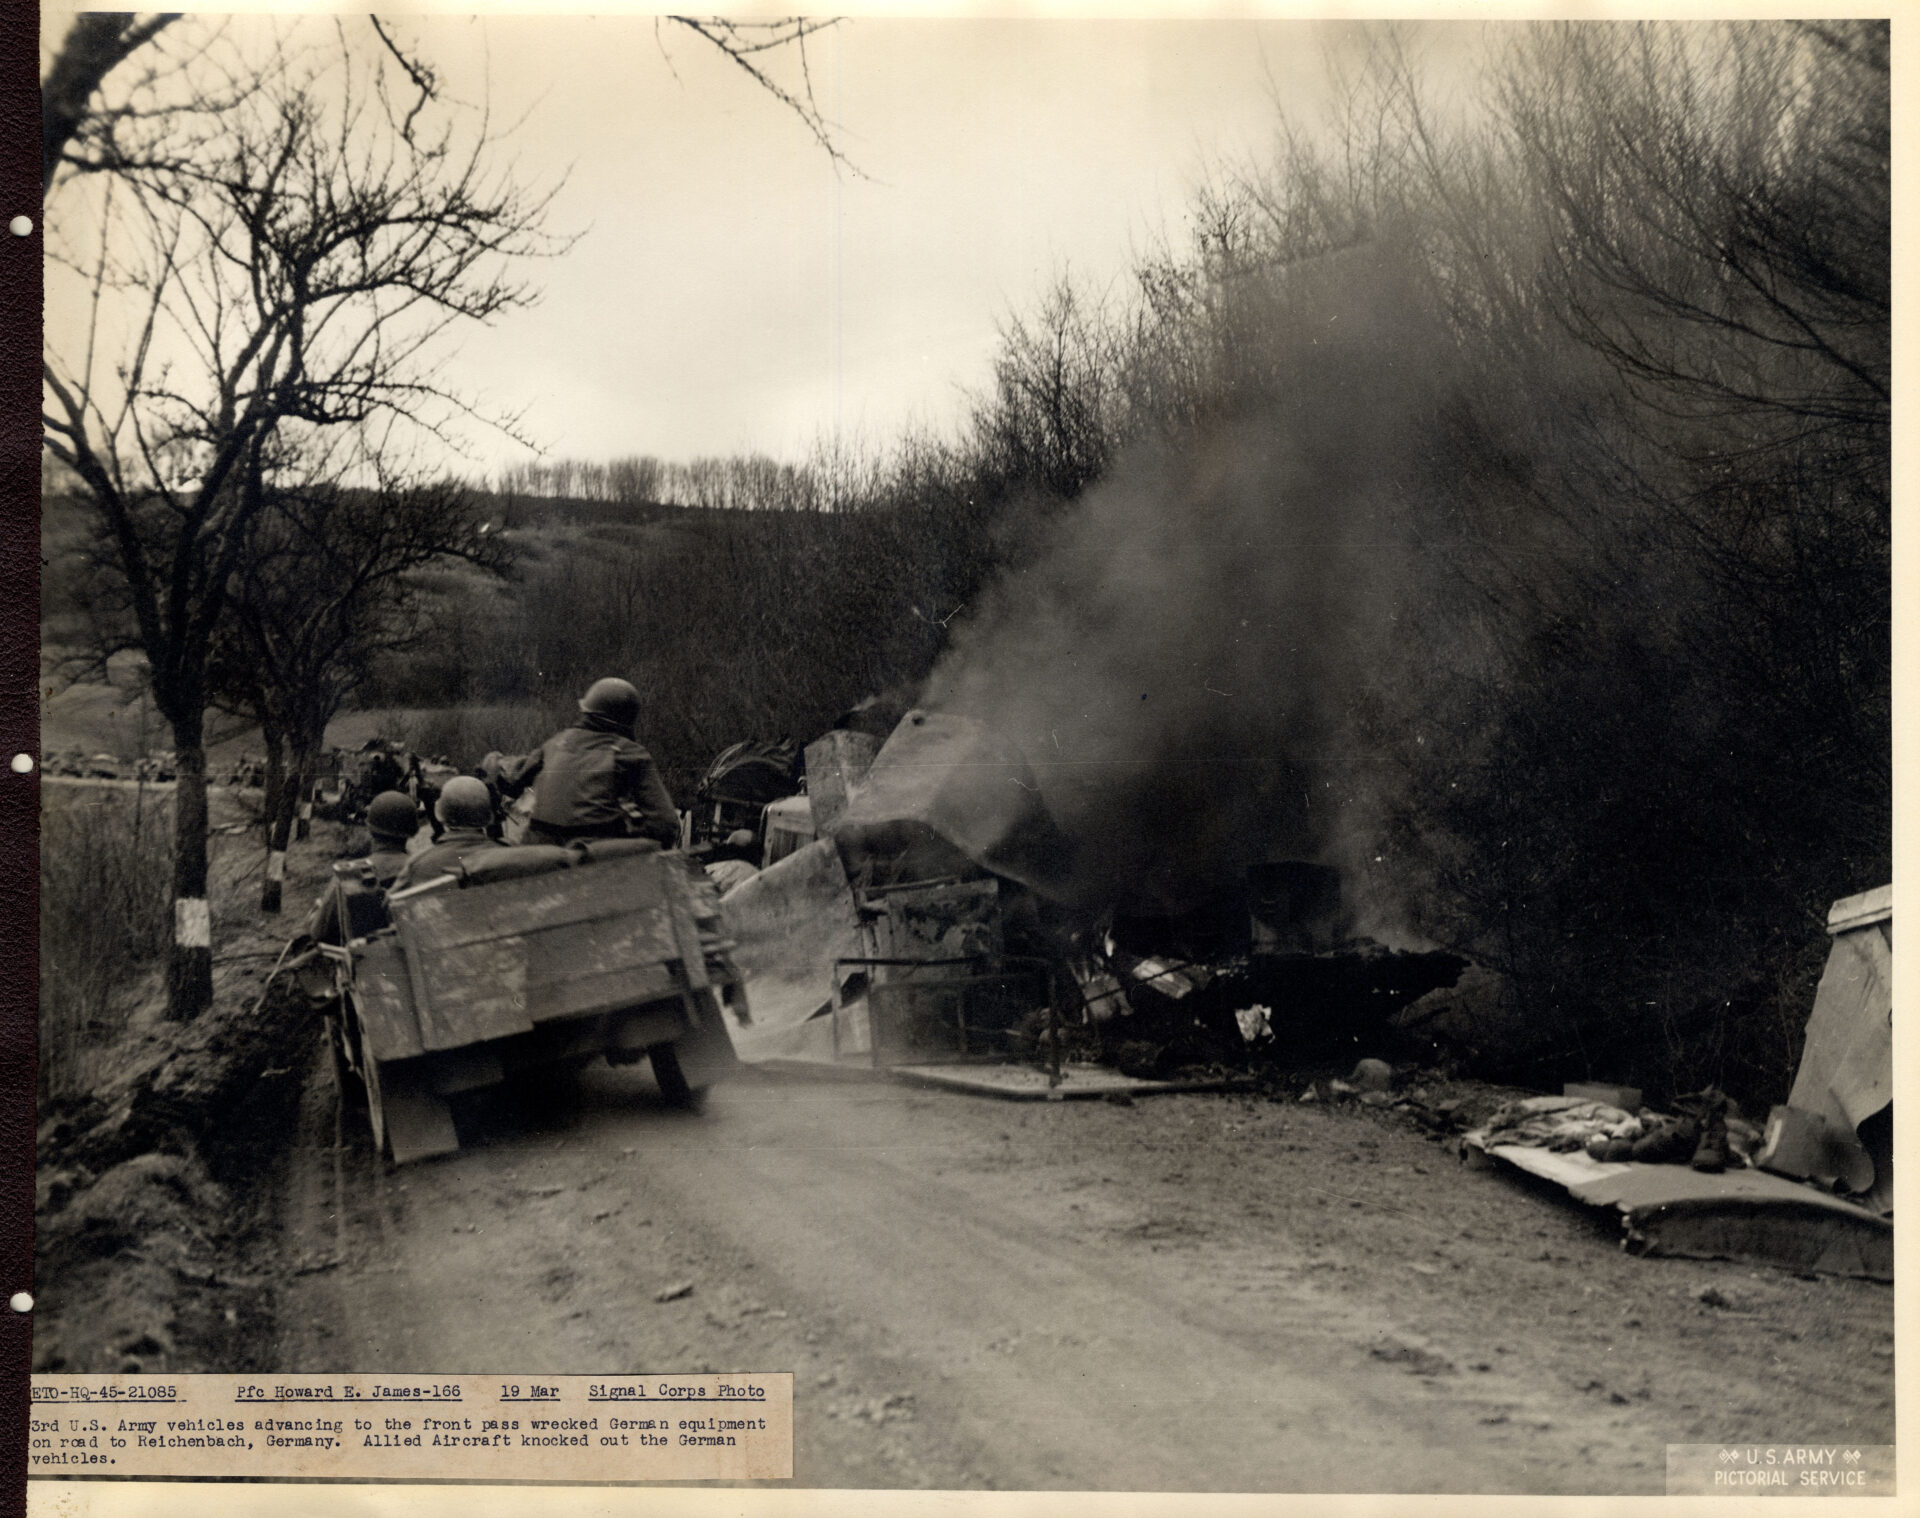 Troops passing wrecked German equipment